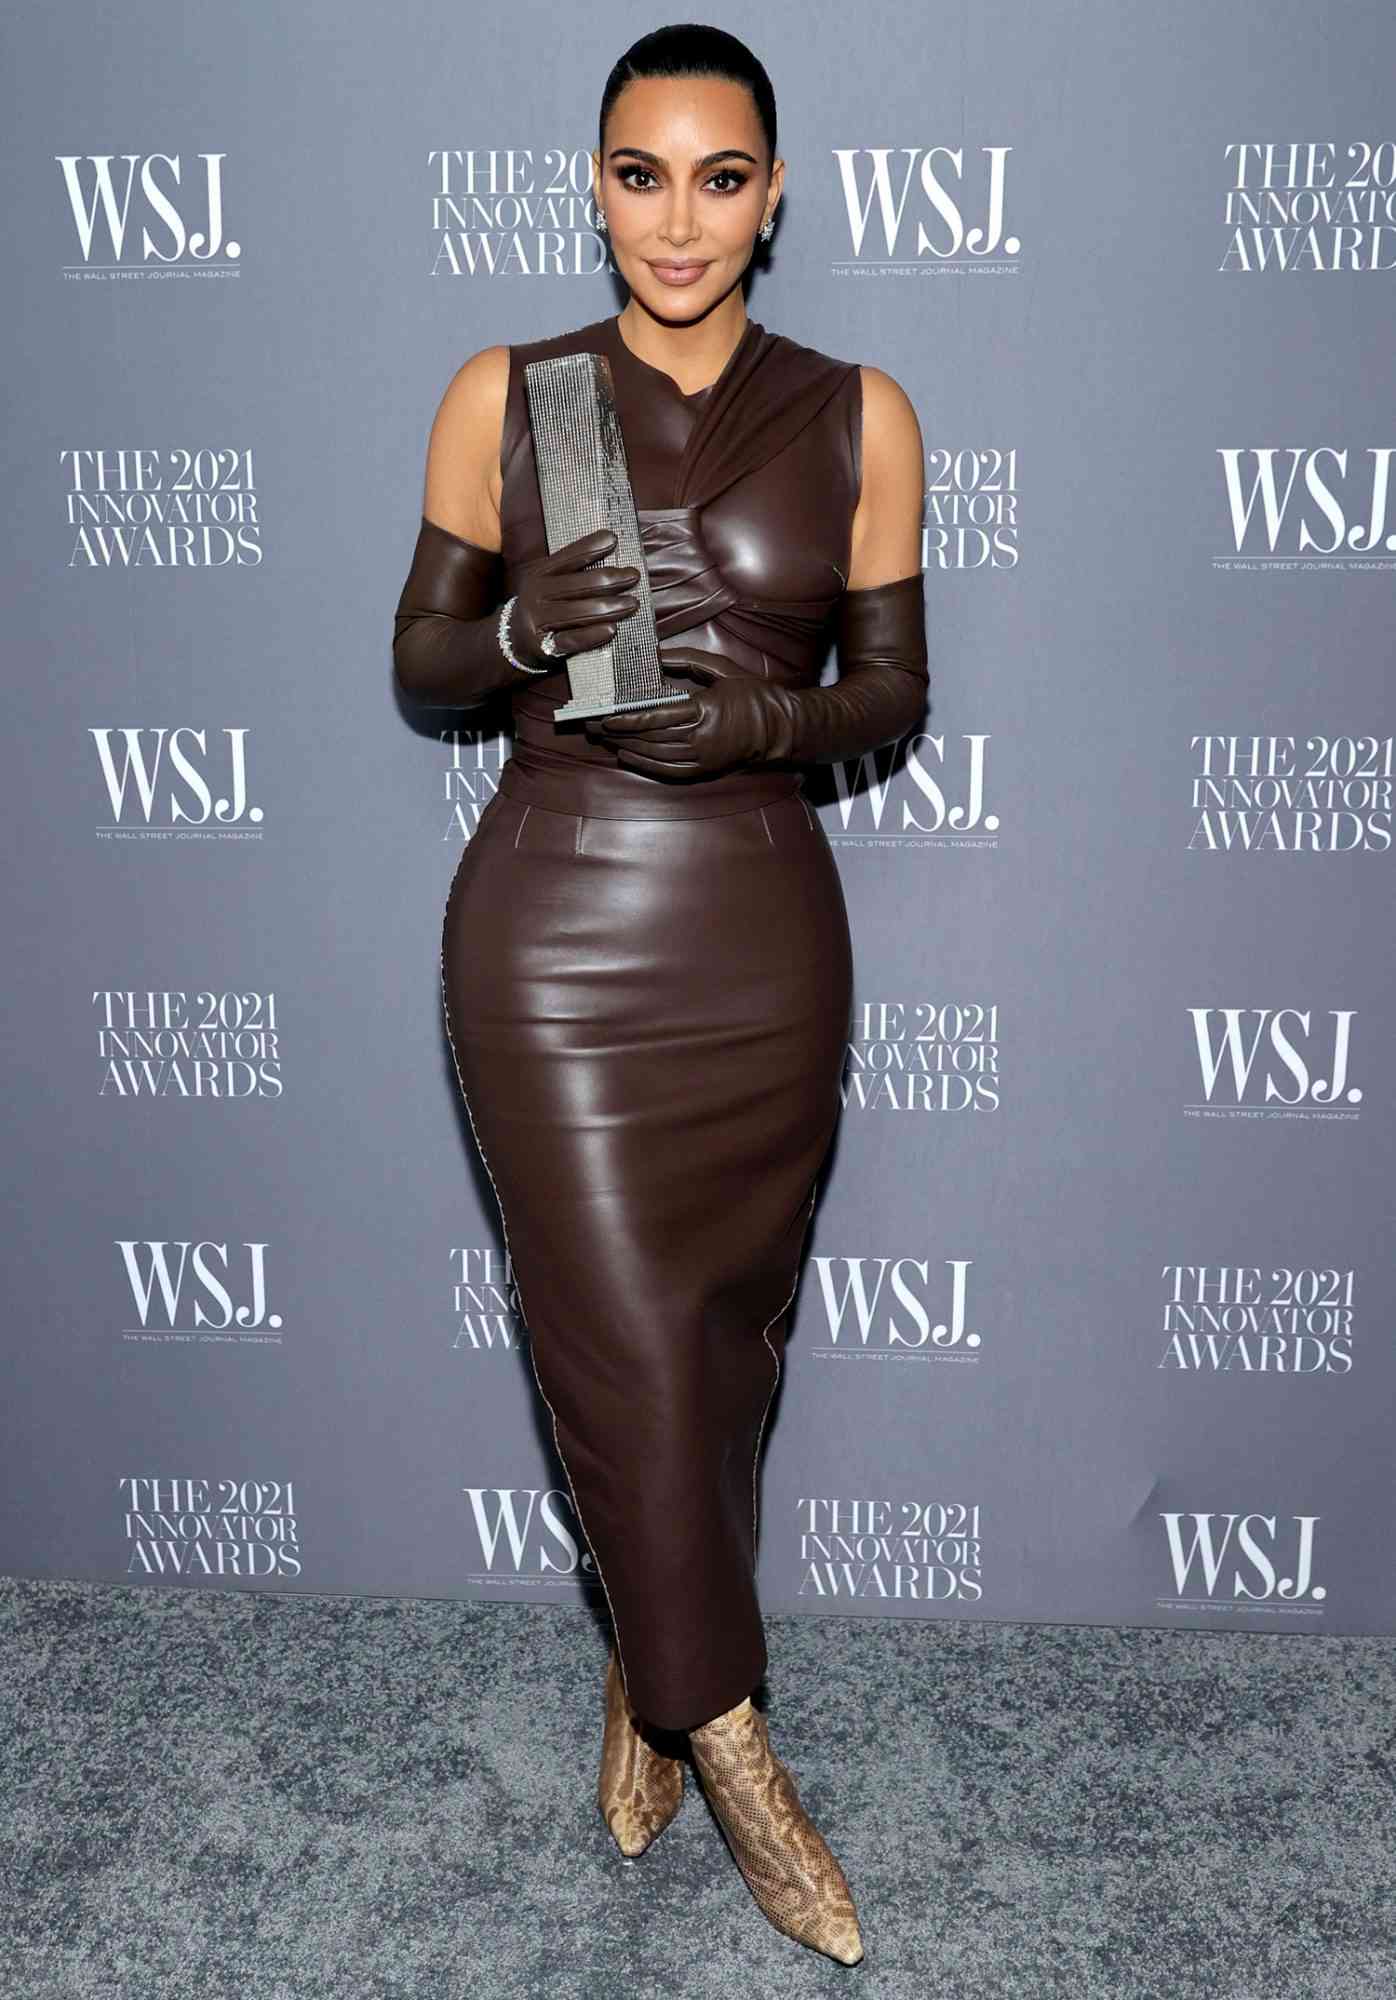 Kim Kardashian West poses with an award during the WSJ. Magazine 2021 Innovator Awards sponsored by Samsung, Harry Winston, and Rémy Martin